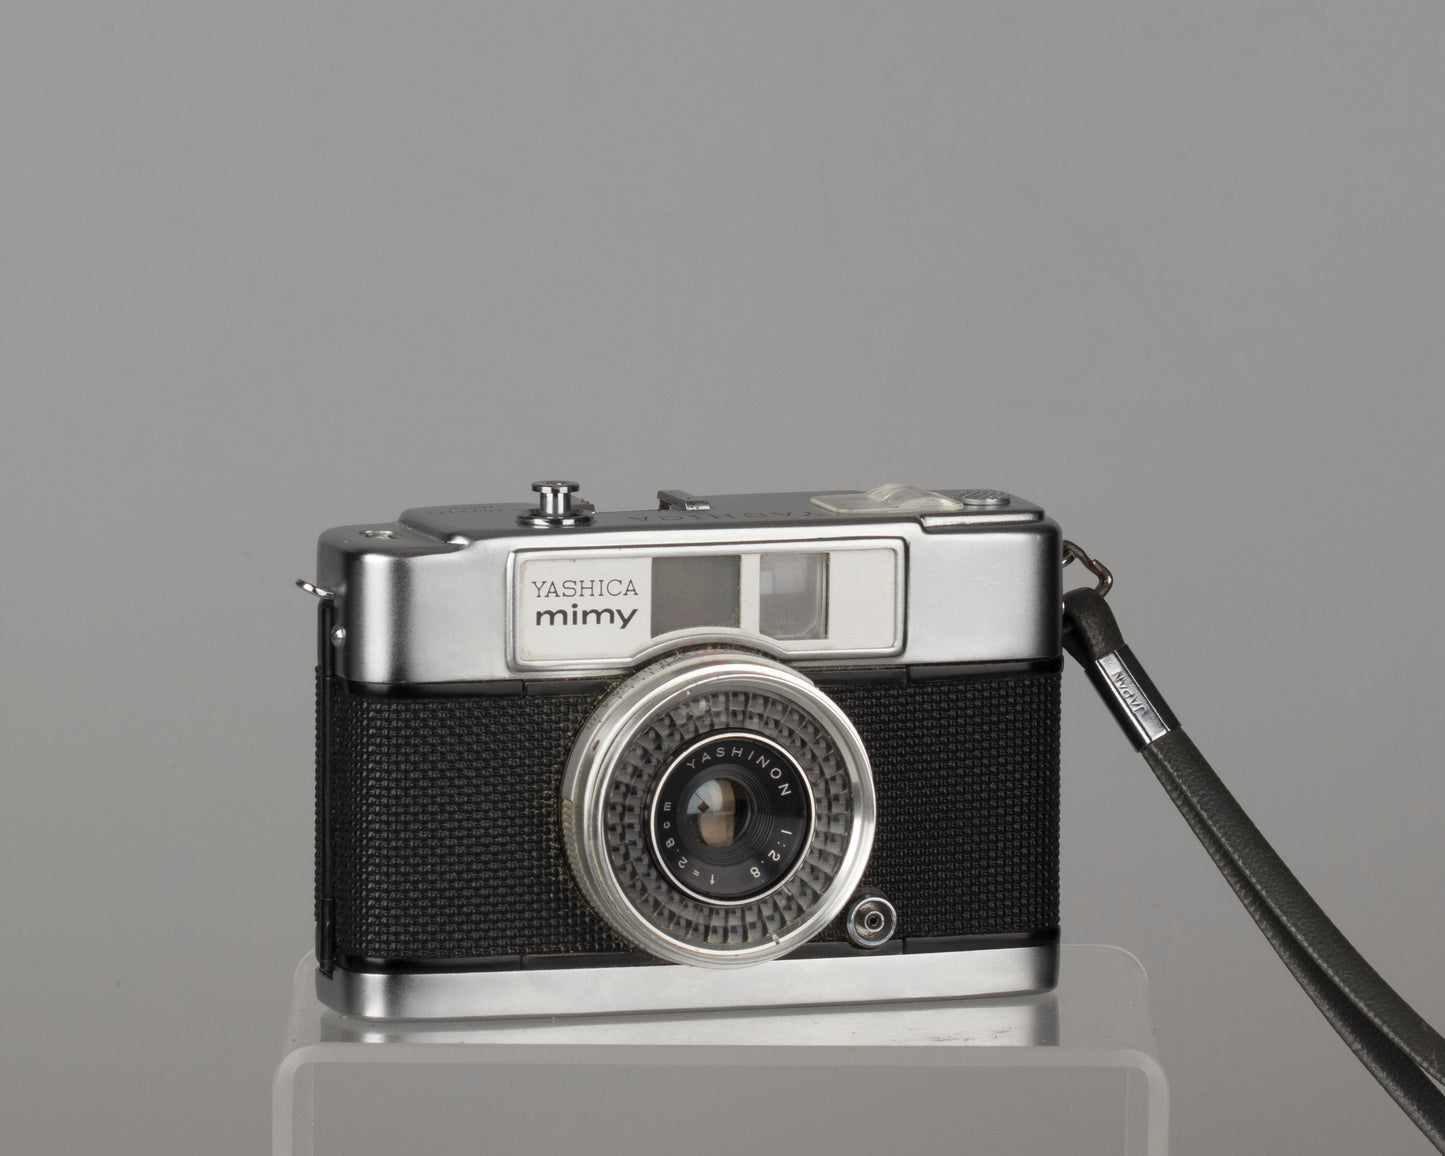 Yashica Mimy half-frame 35mm camera plus Braun flash